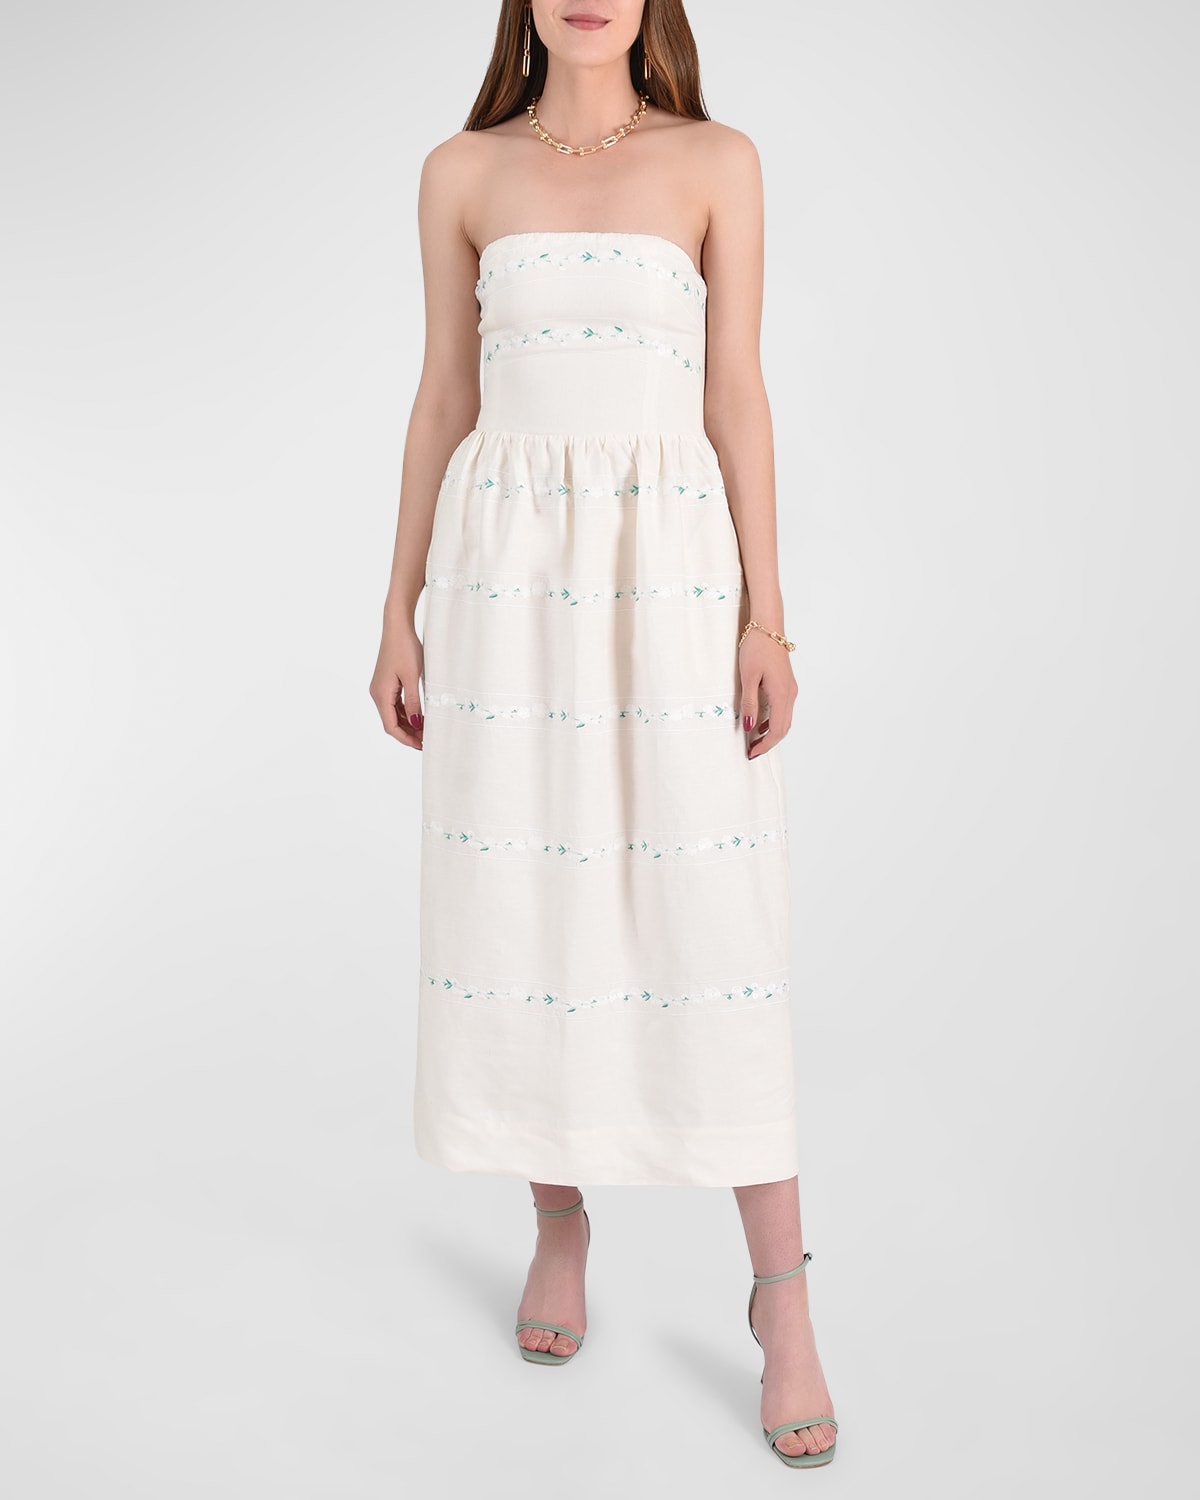 FANM MON Anim Strapless Linen Embroidered Midi Dress